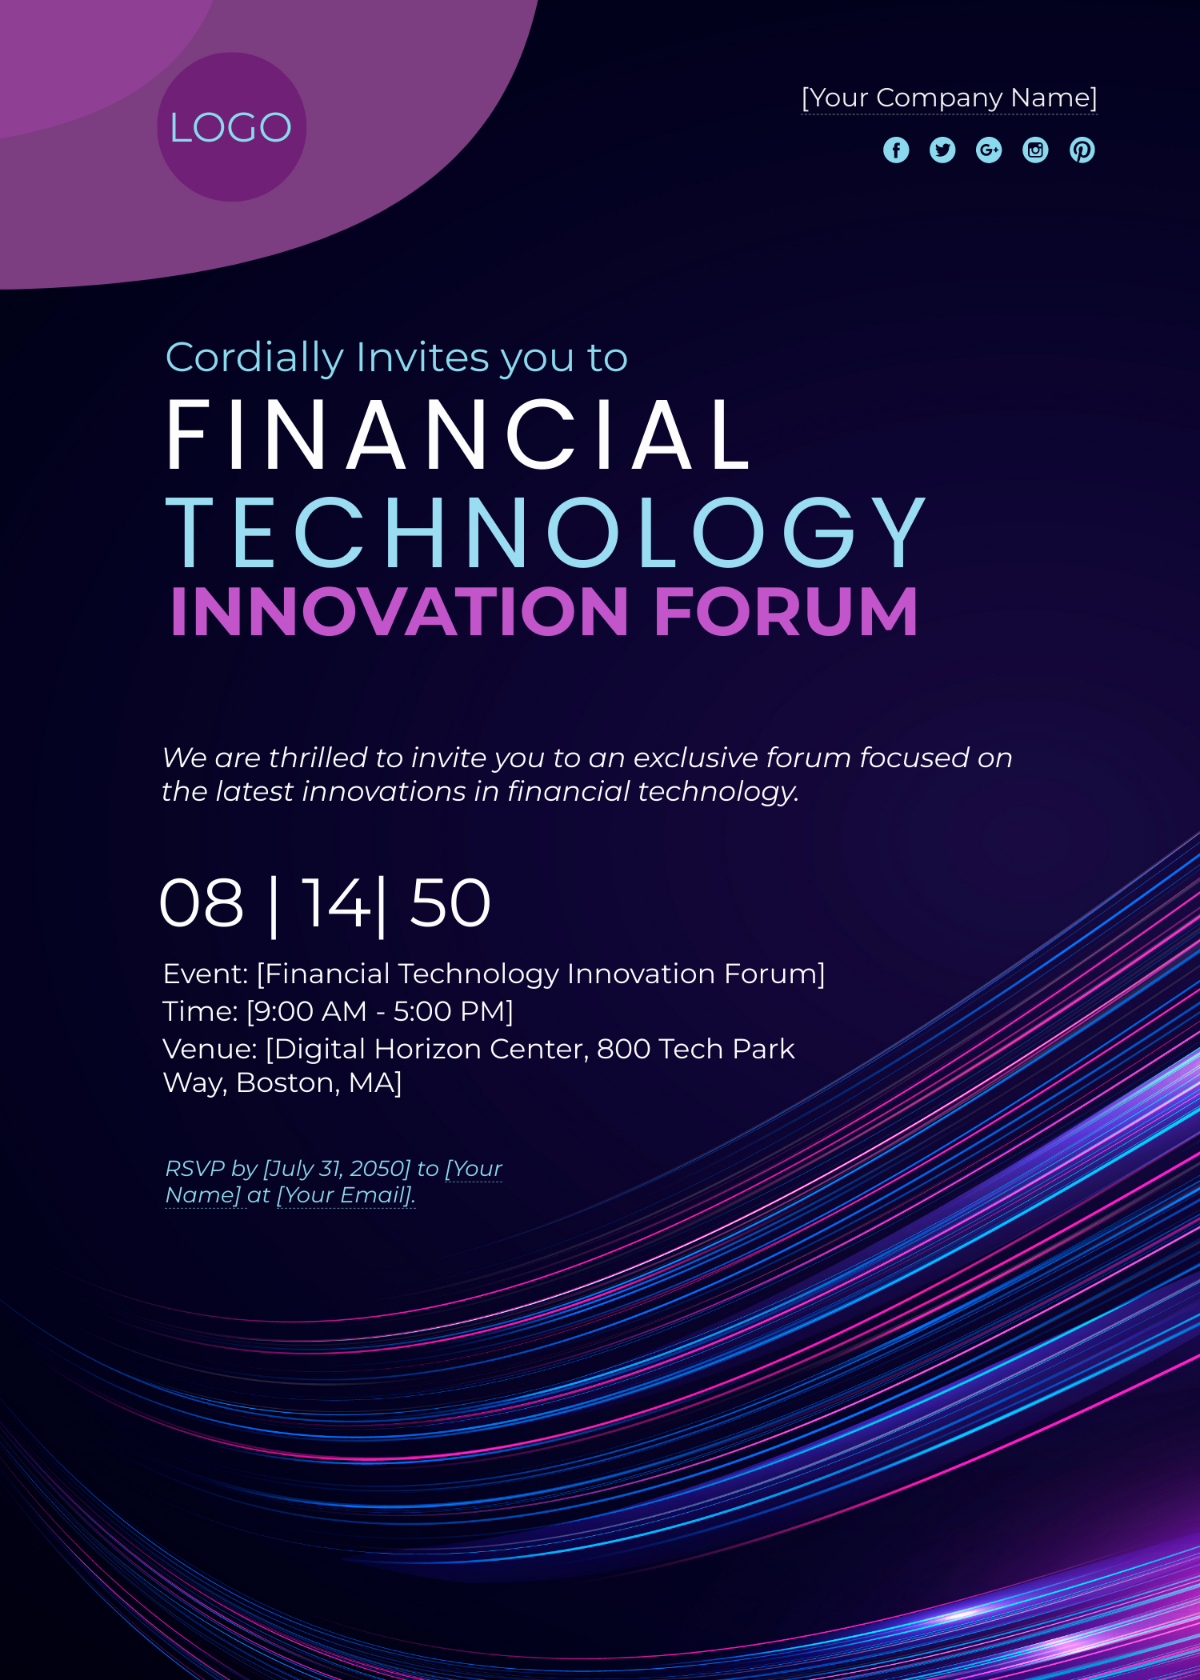 Financial Technology Innovation Forum Invitation Card Template